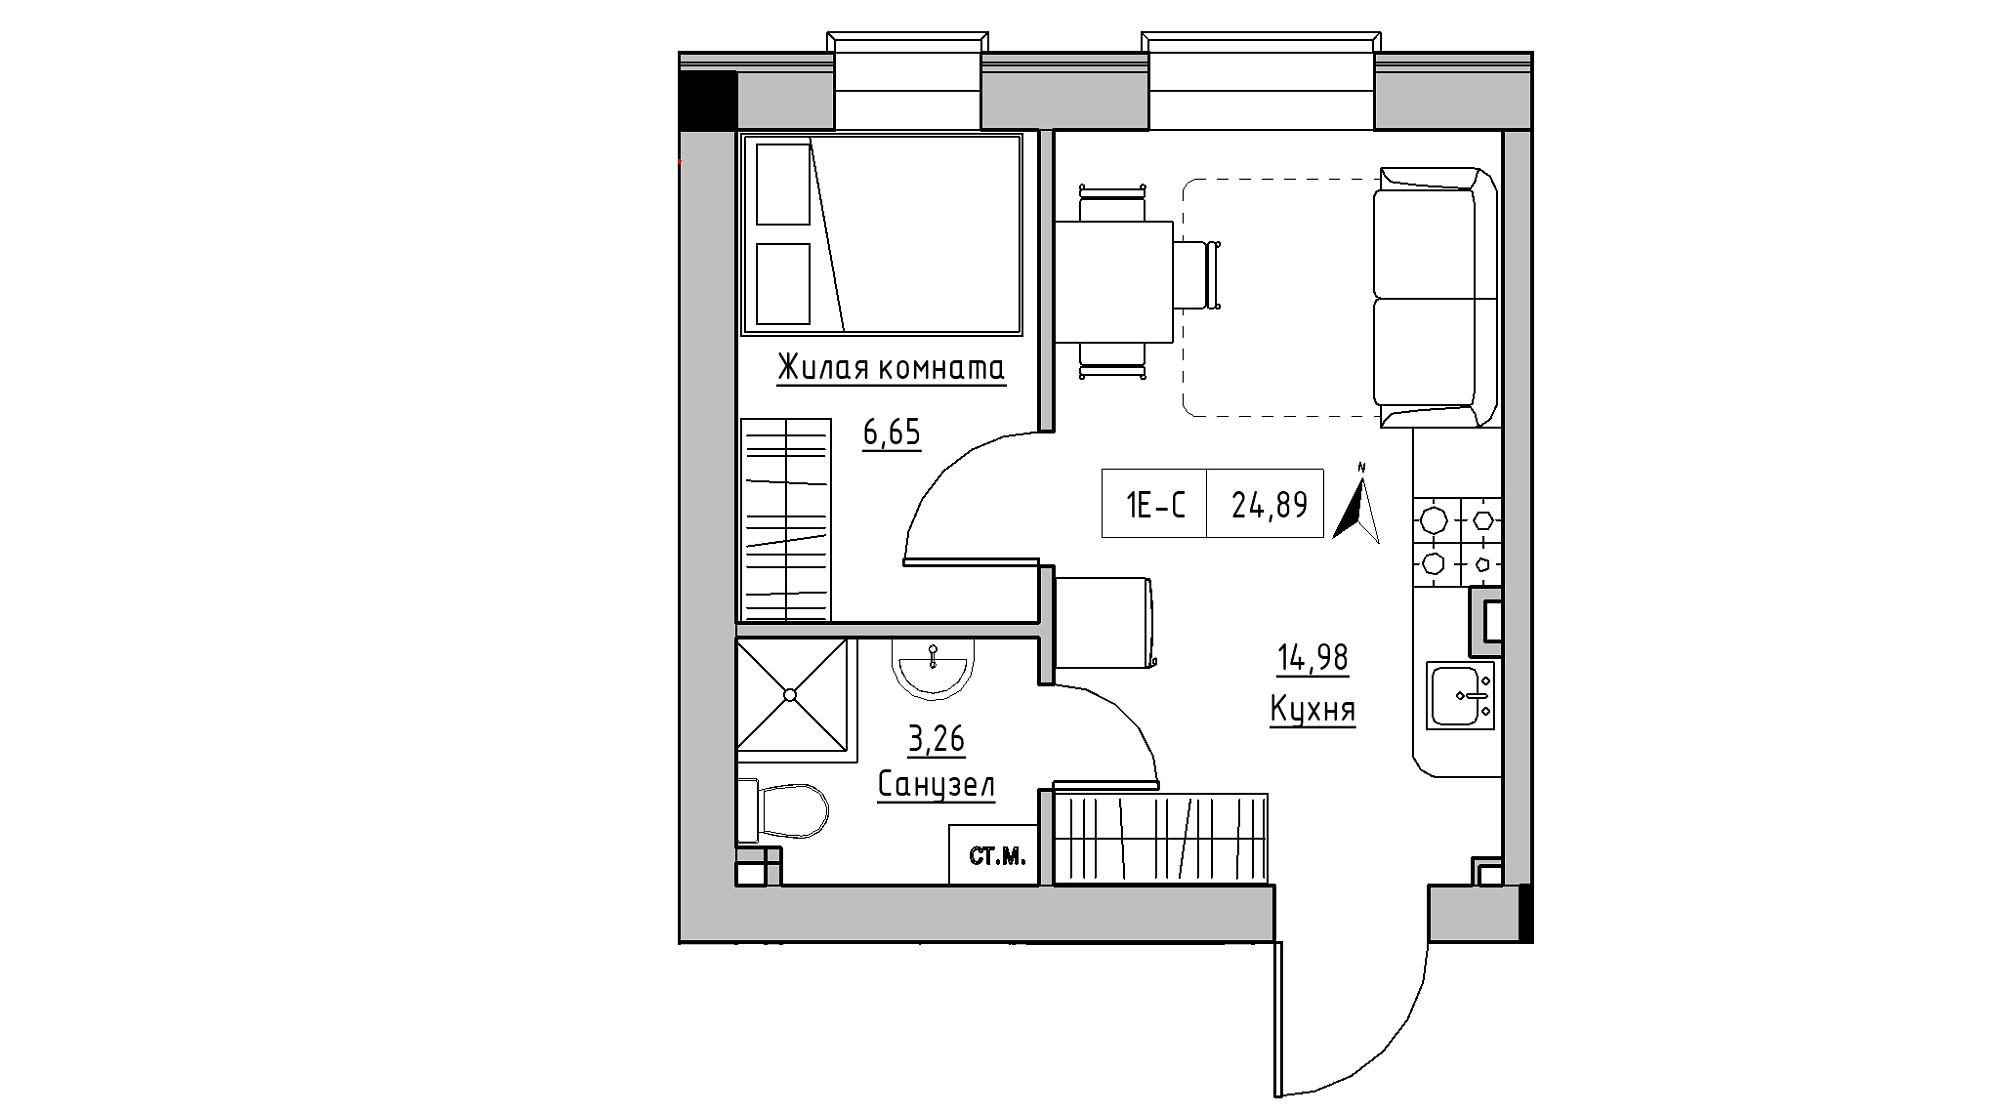 Planning 1-rm flats area 24.98m2, KS-014-01/0004.